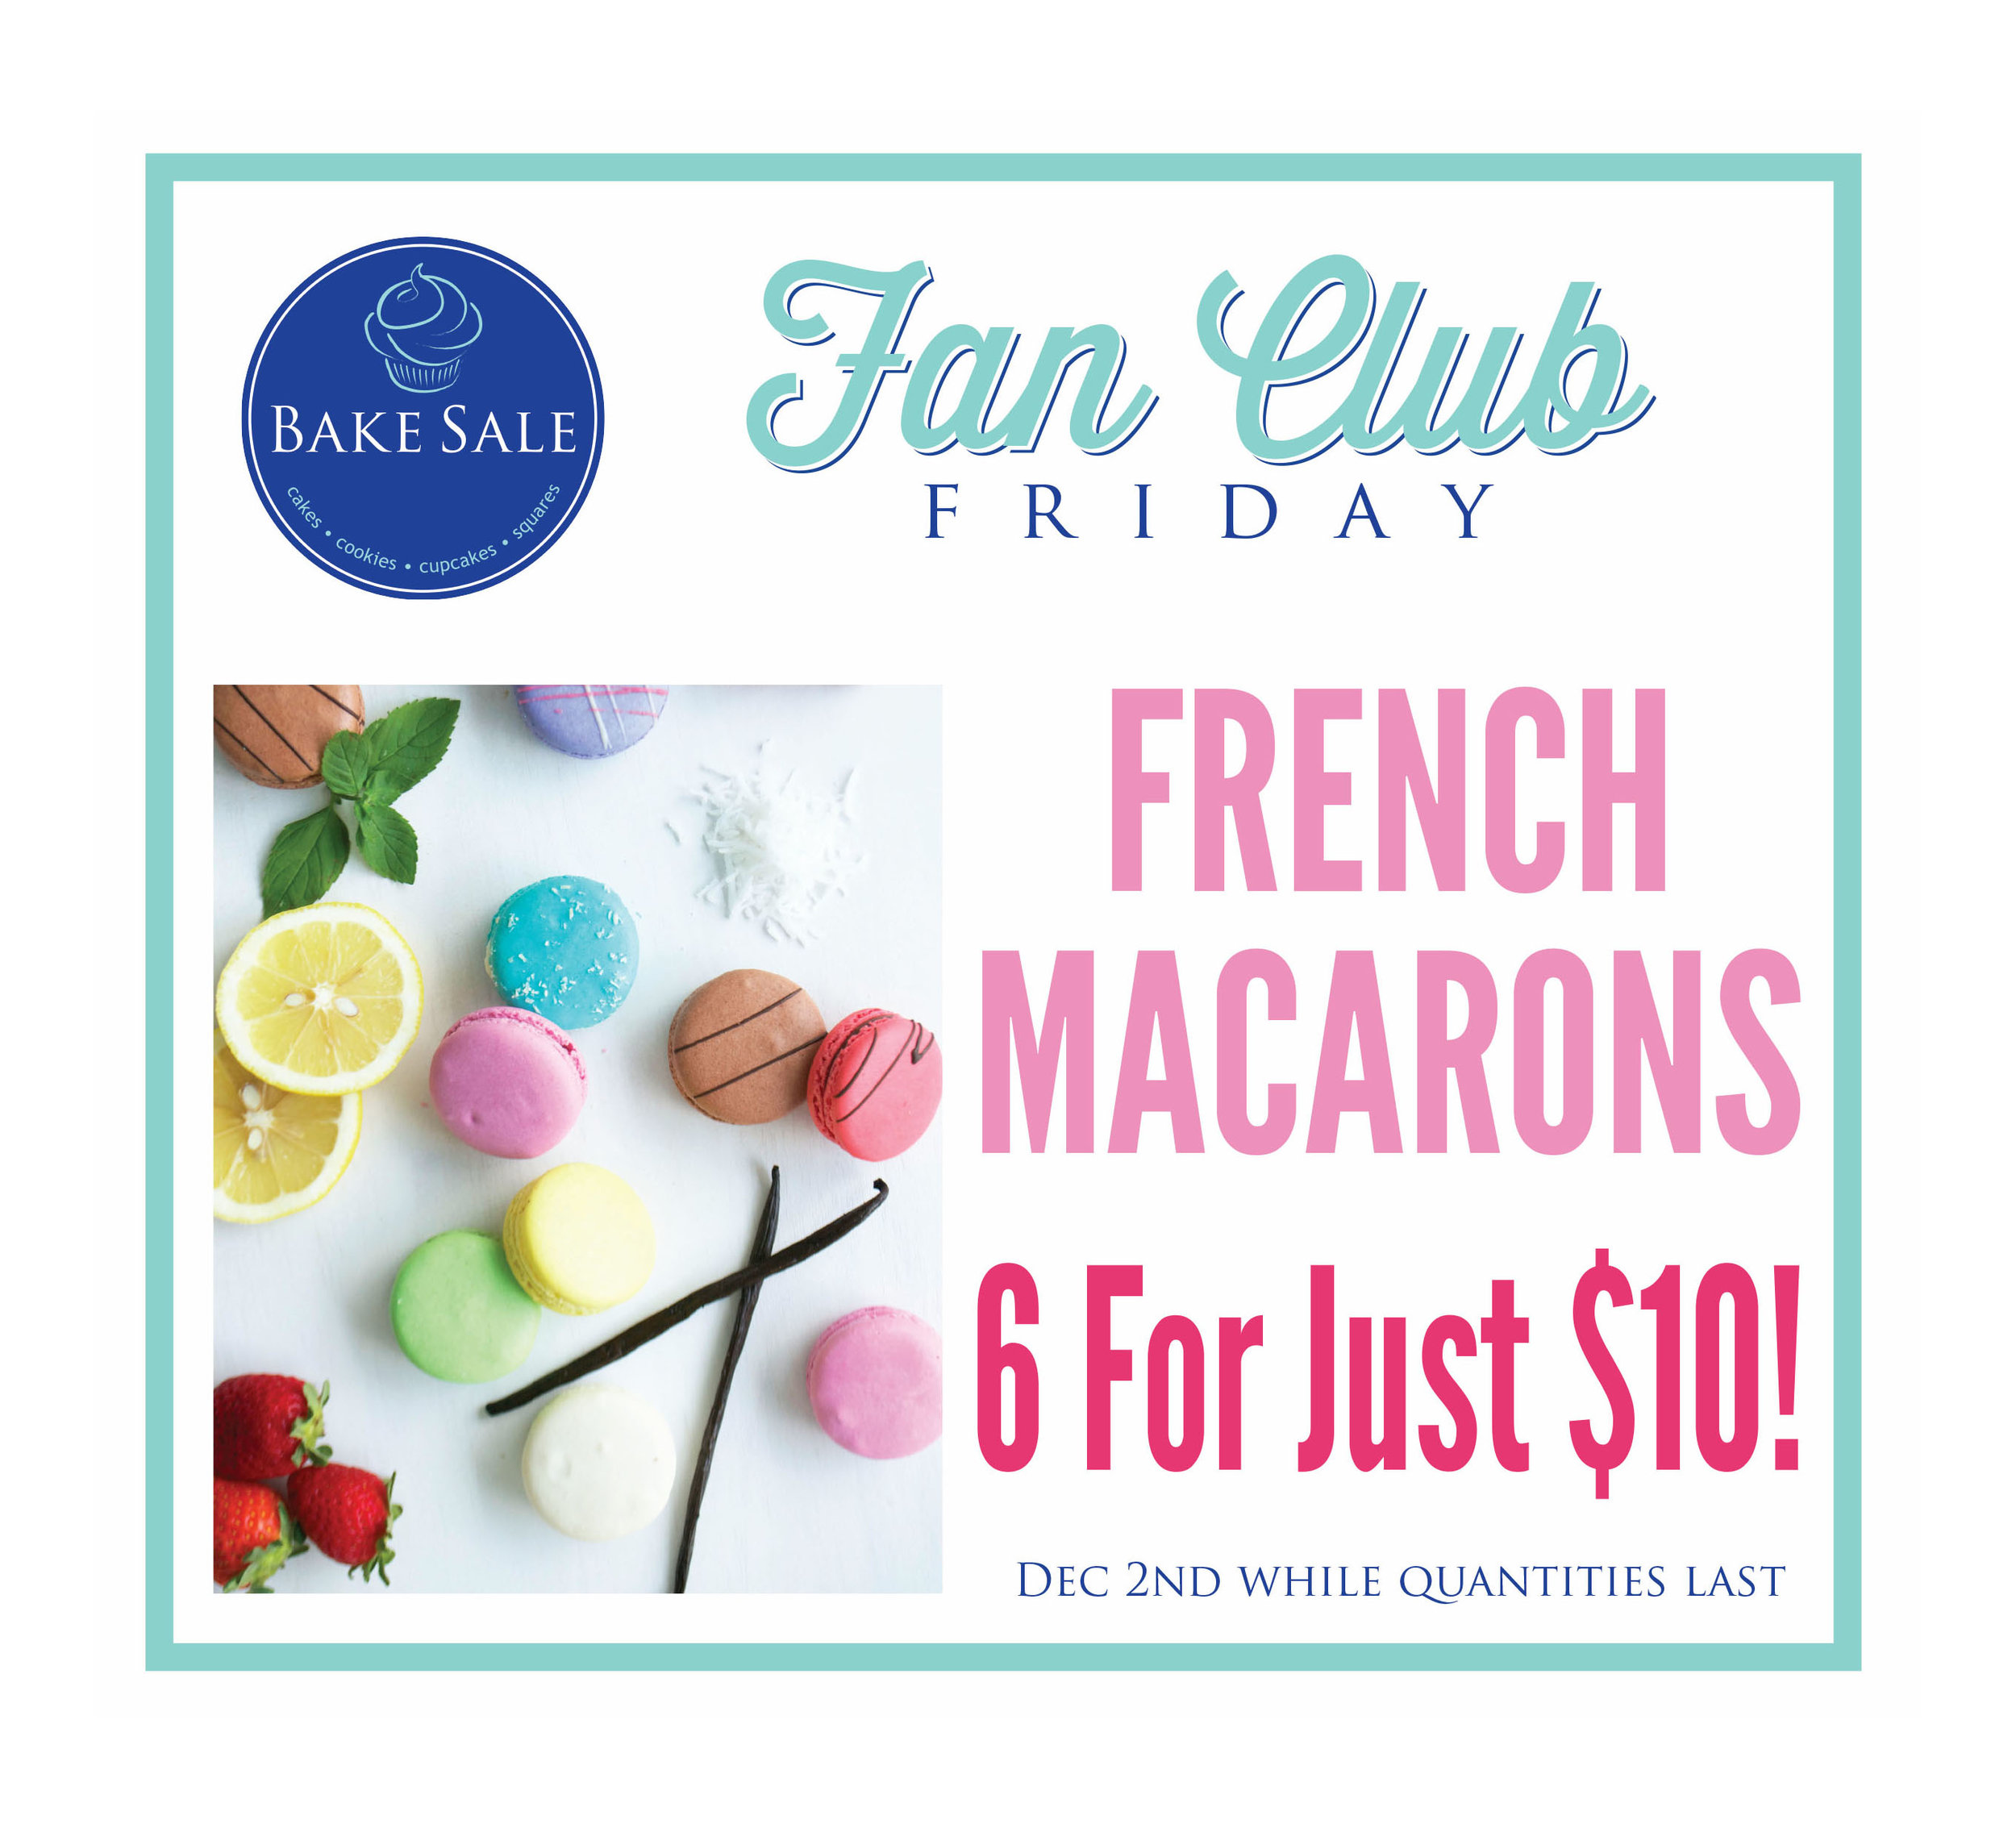 Bake Sale Fan Club French Macarons.jpg